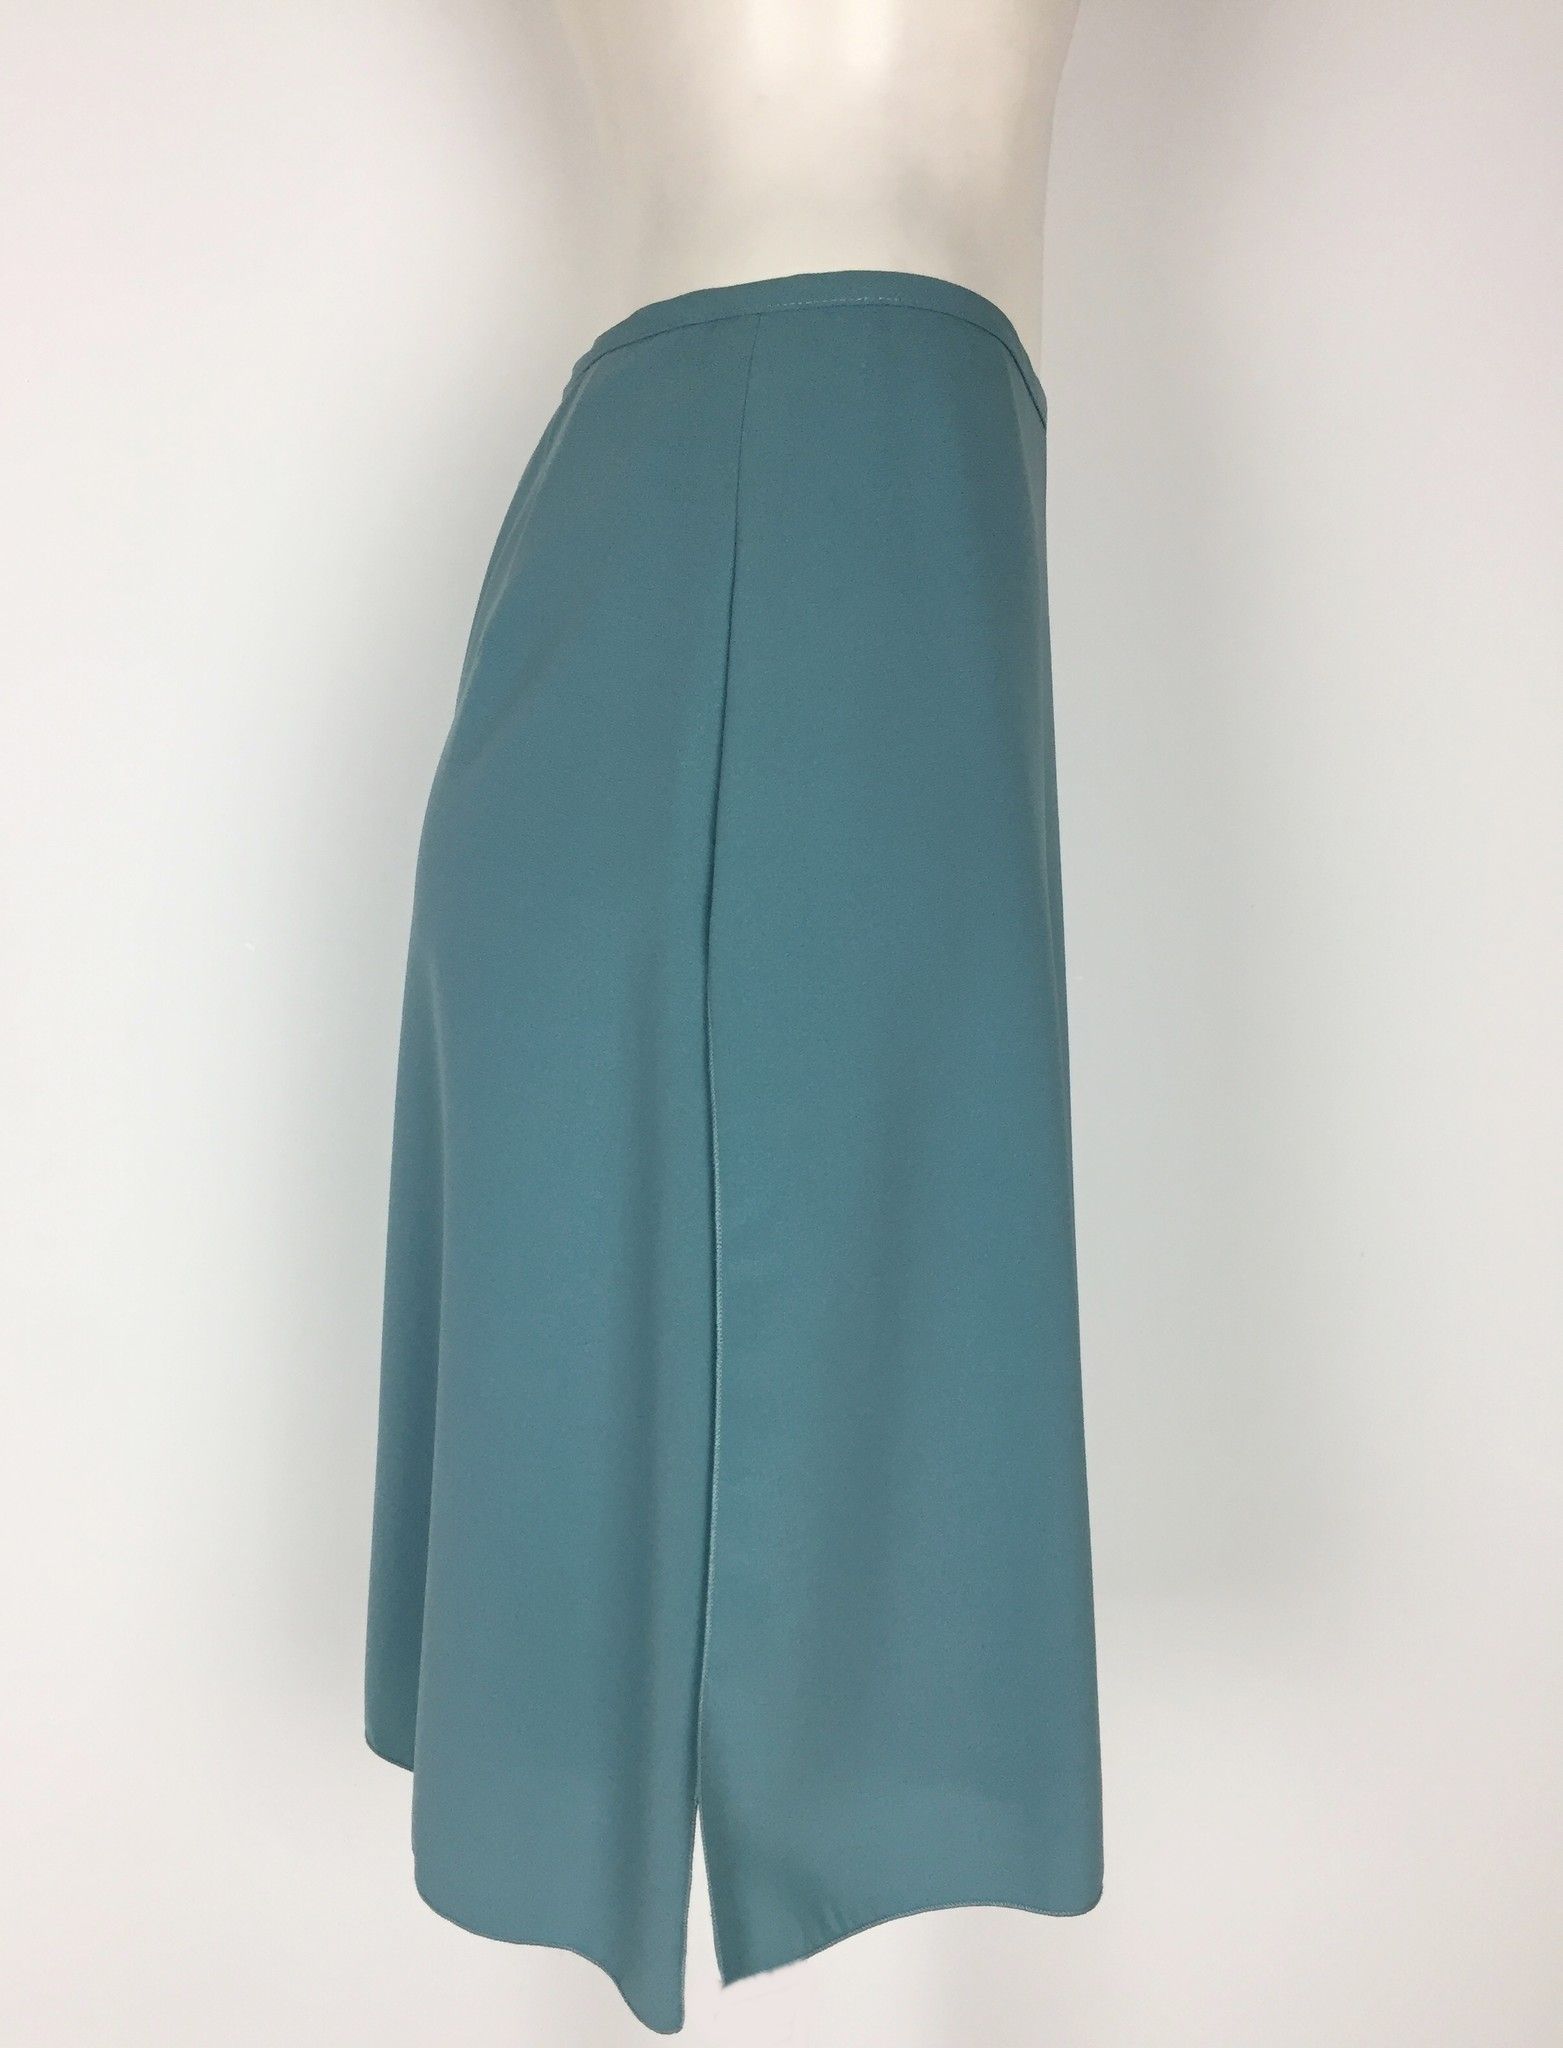 Adele Fado Double Veils Skirt Cod.67222